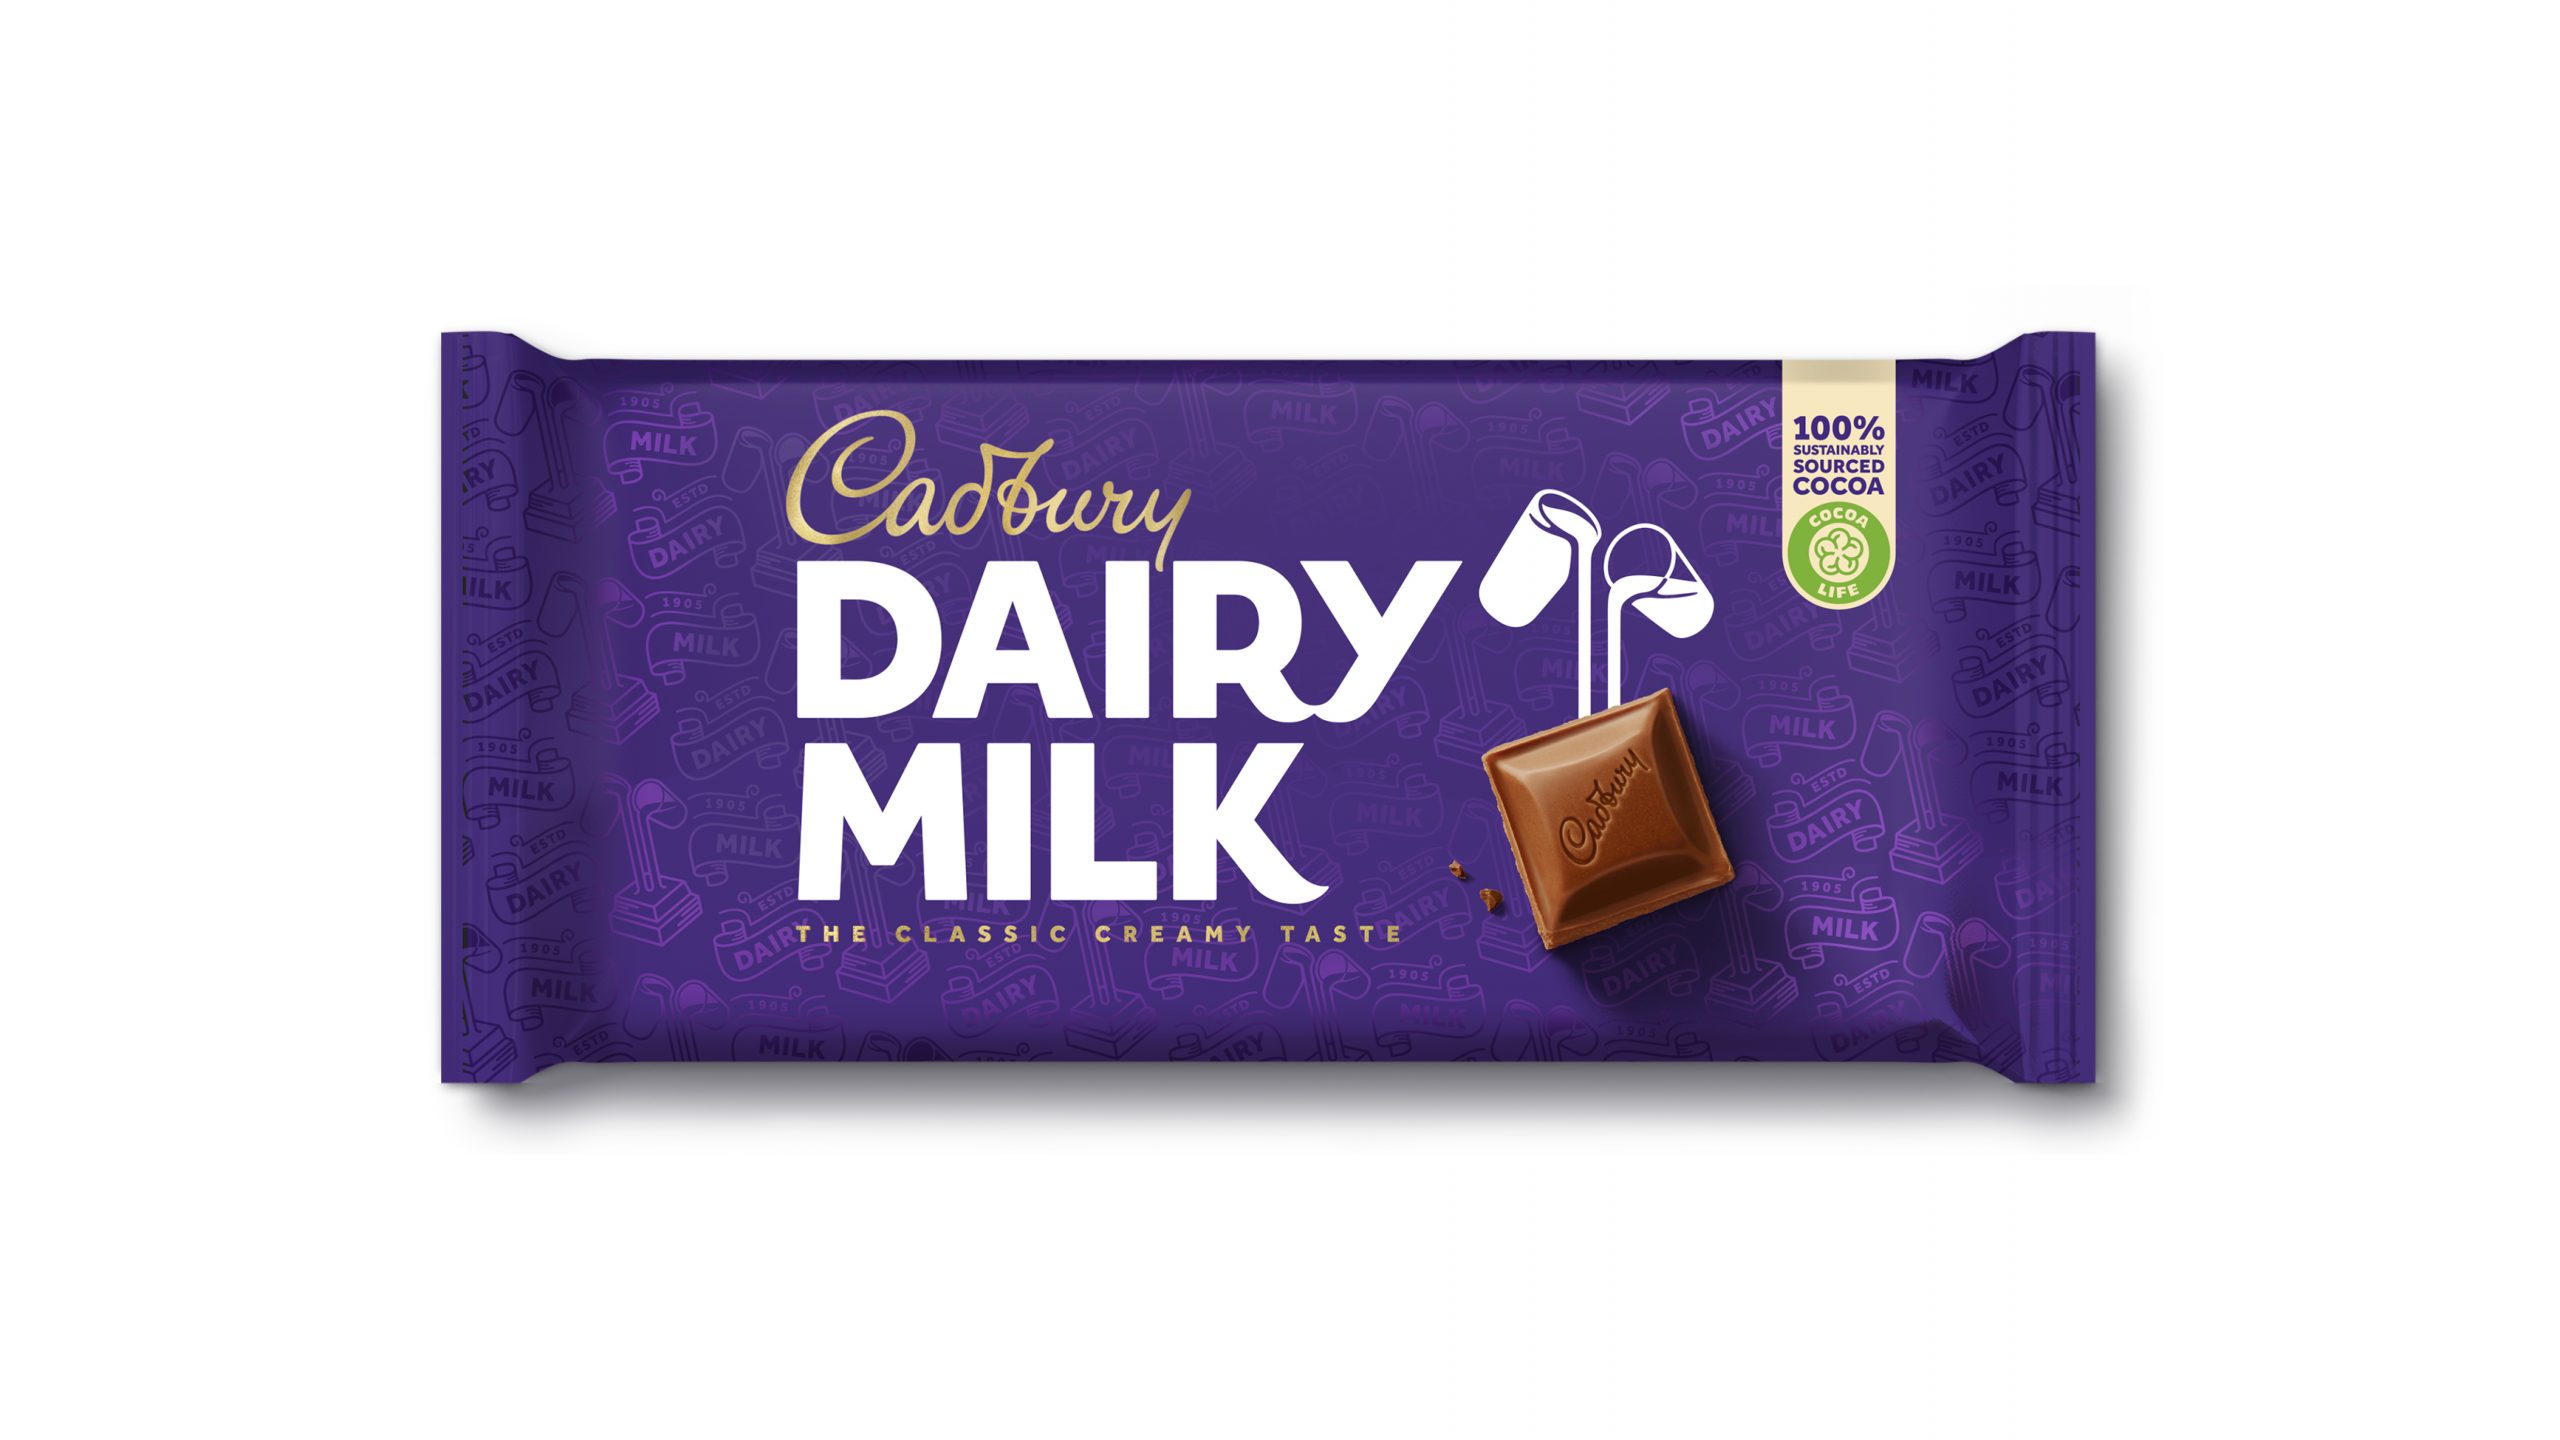 Iconic Cadbury Dairy Milk range launches redesign